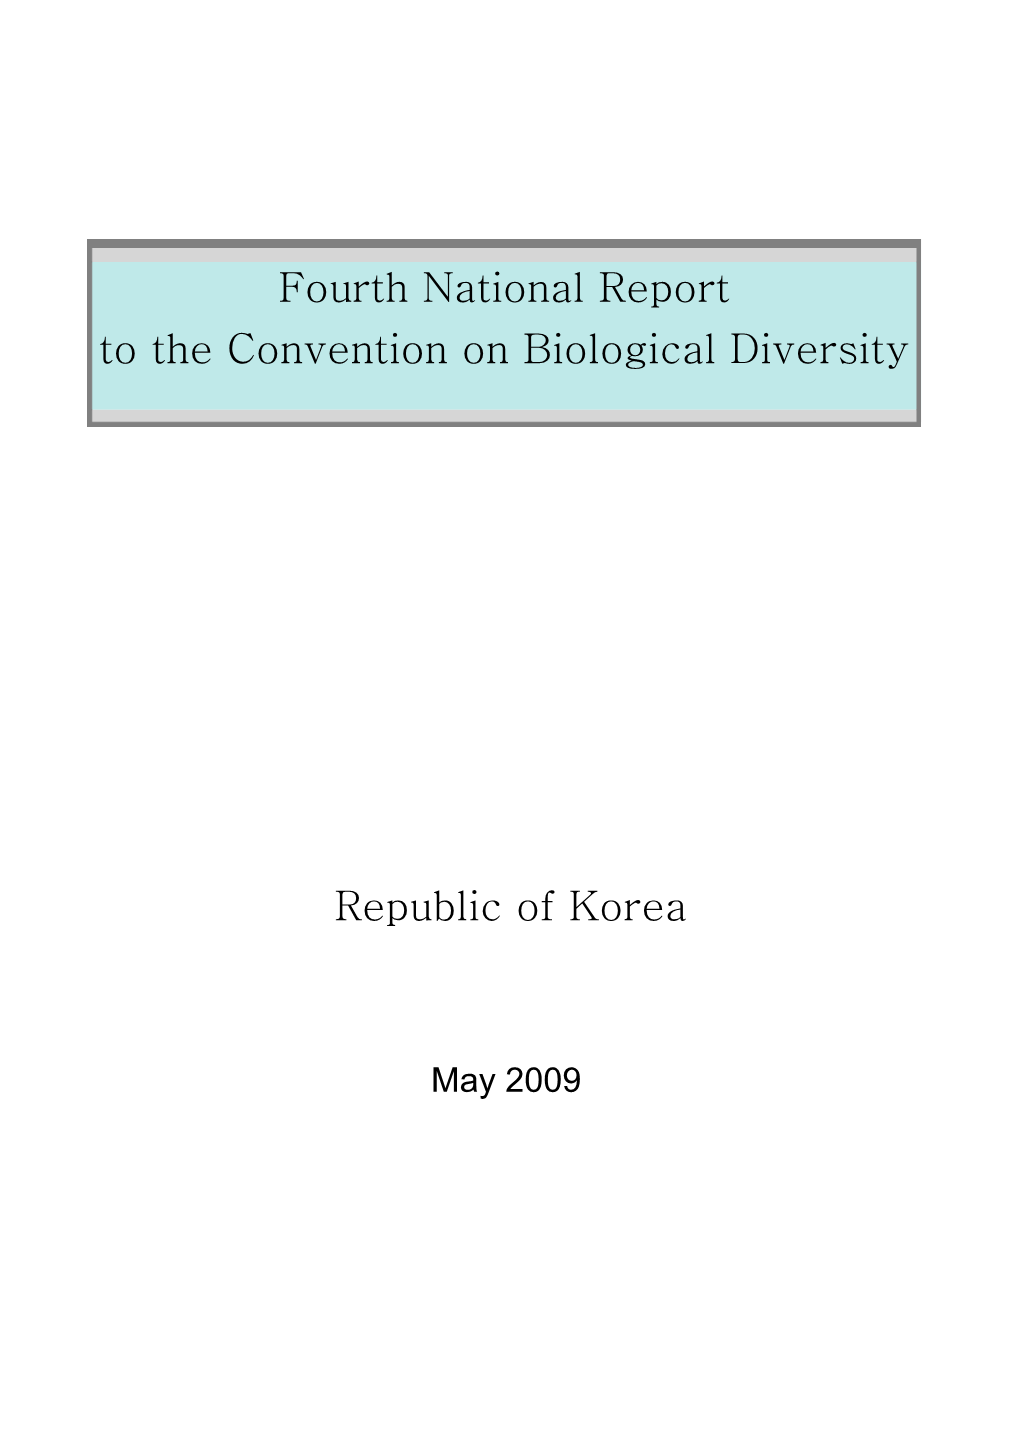 CBD Fourth National Report - Republic of Korea (English Version)